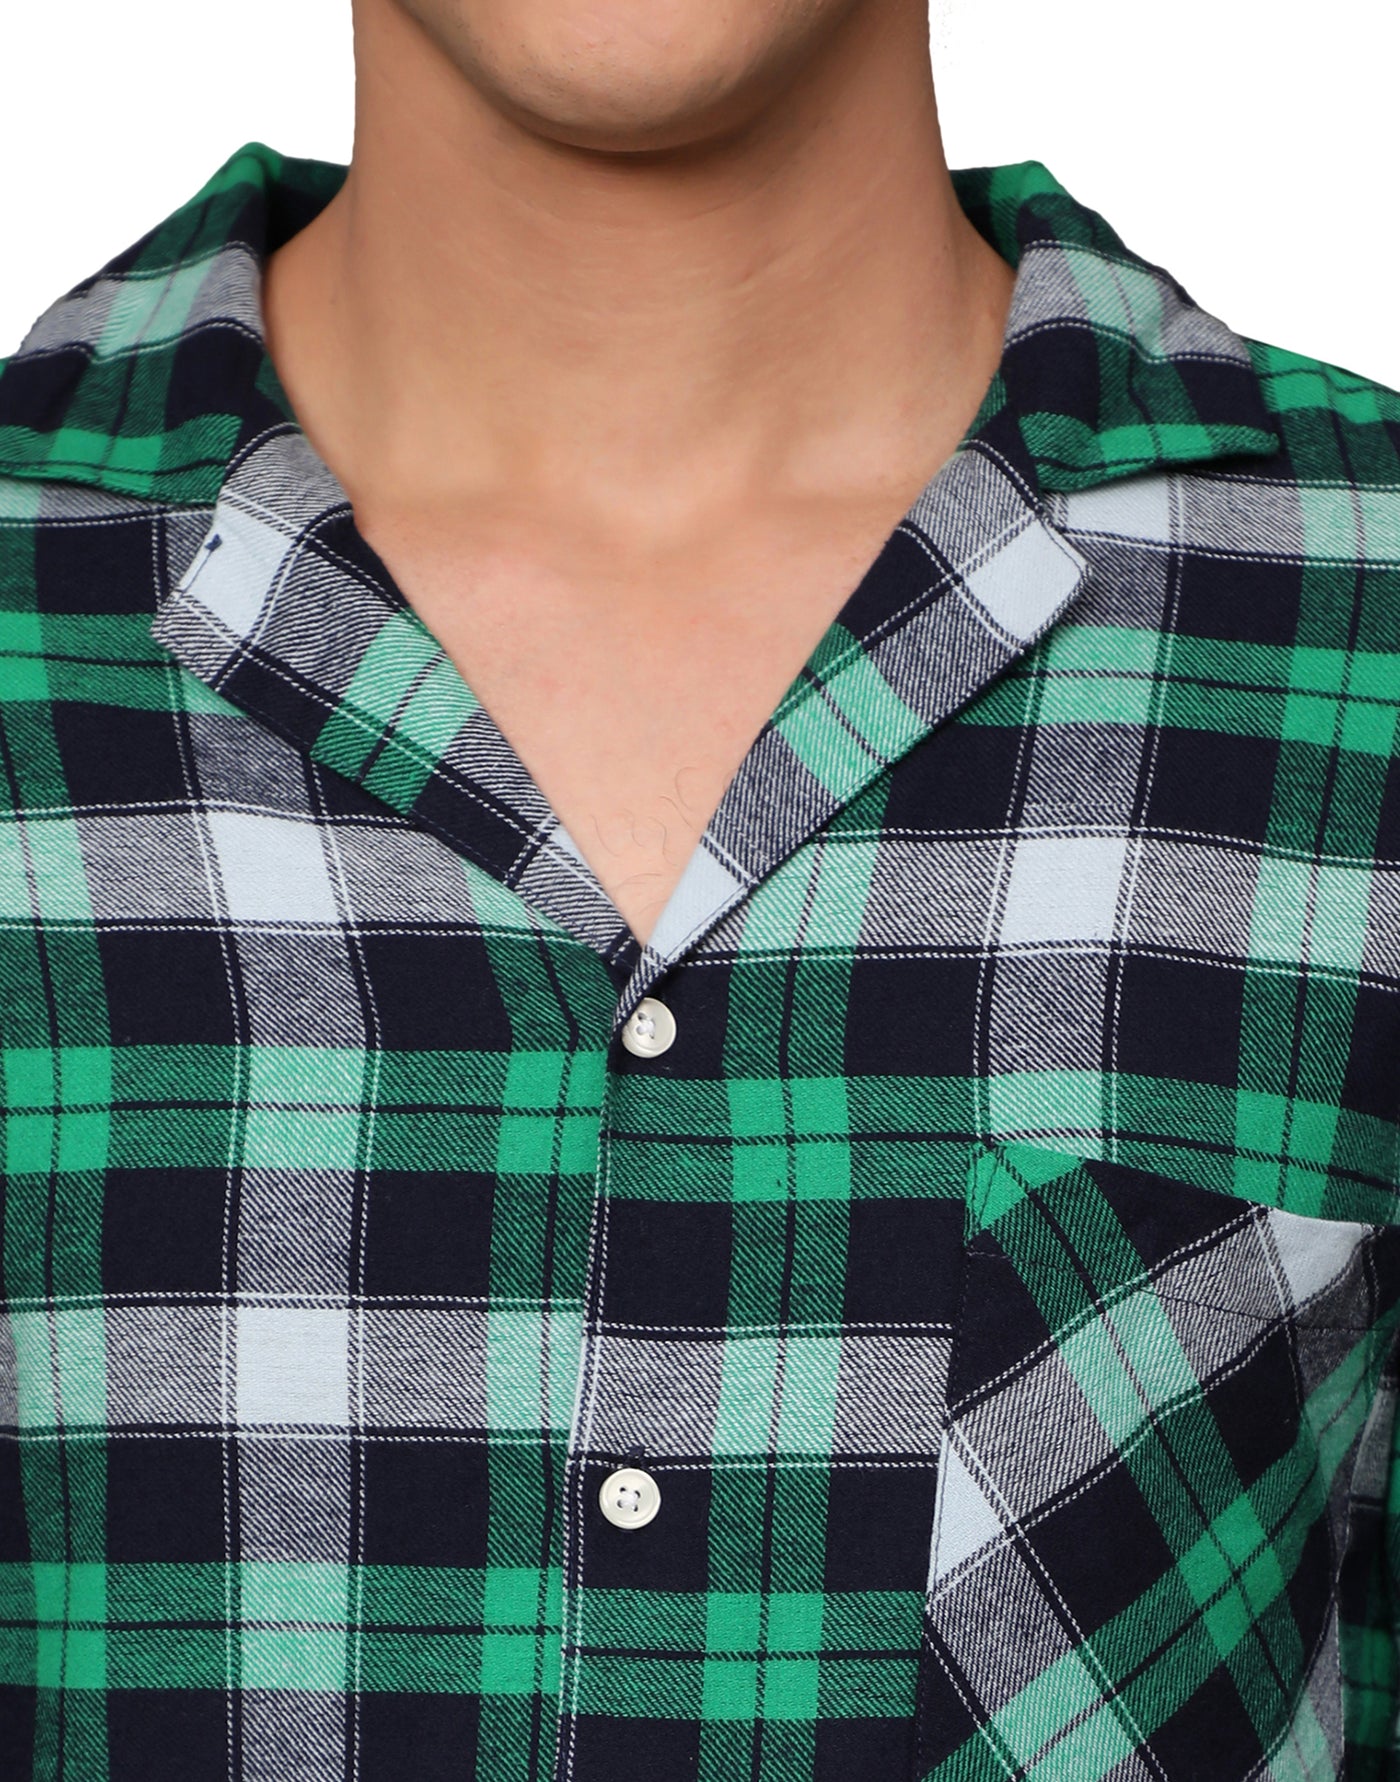 Pyjama Set for Men-Green Checked